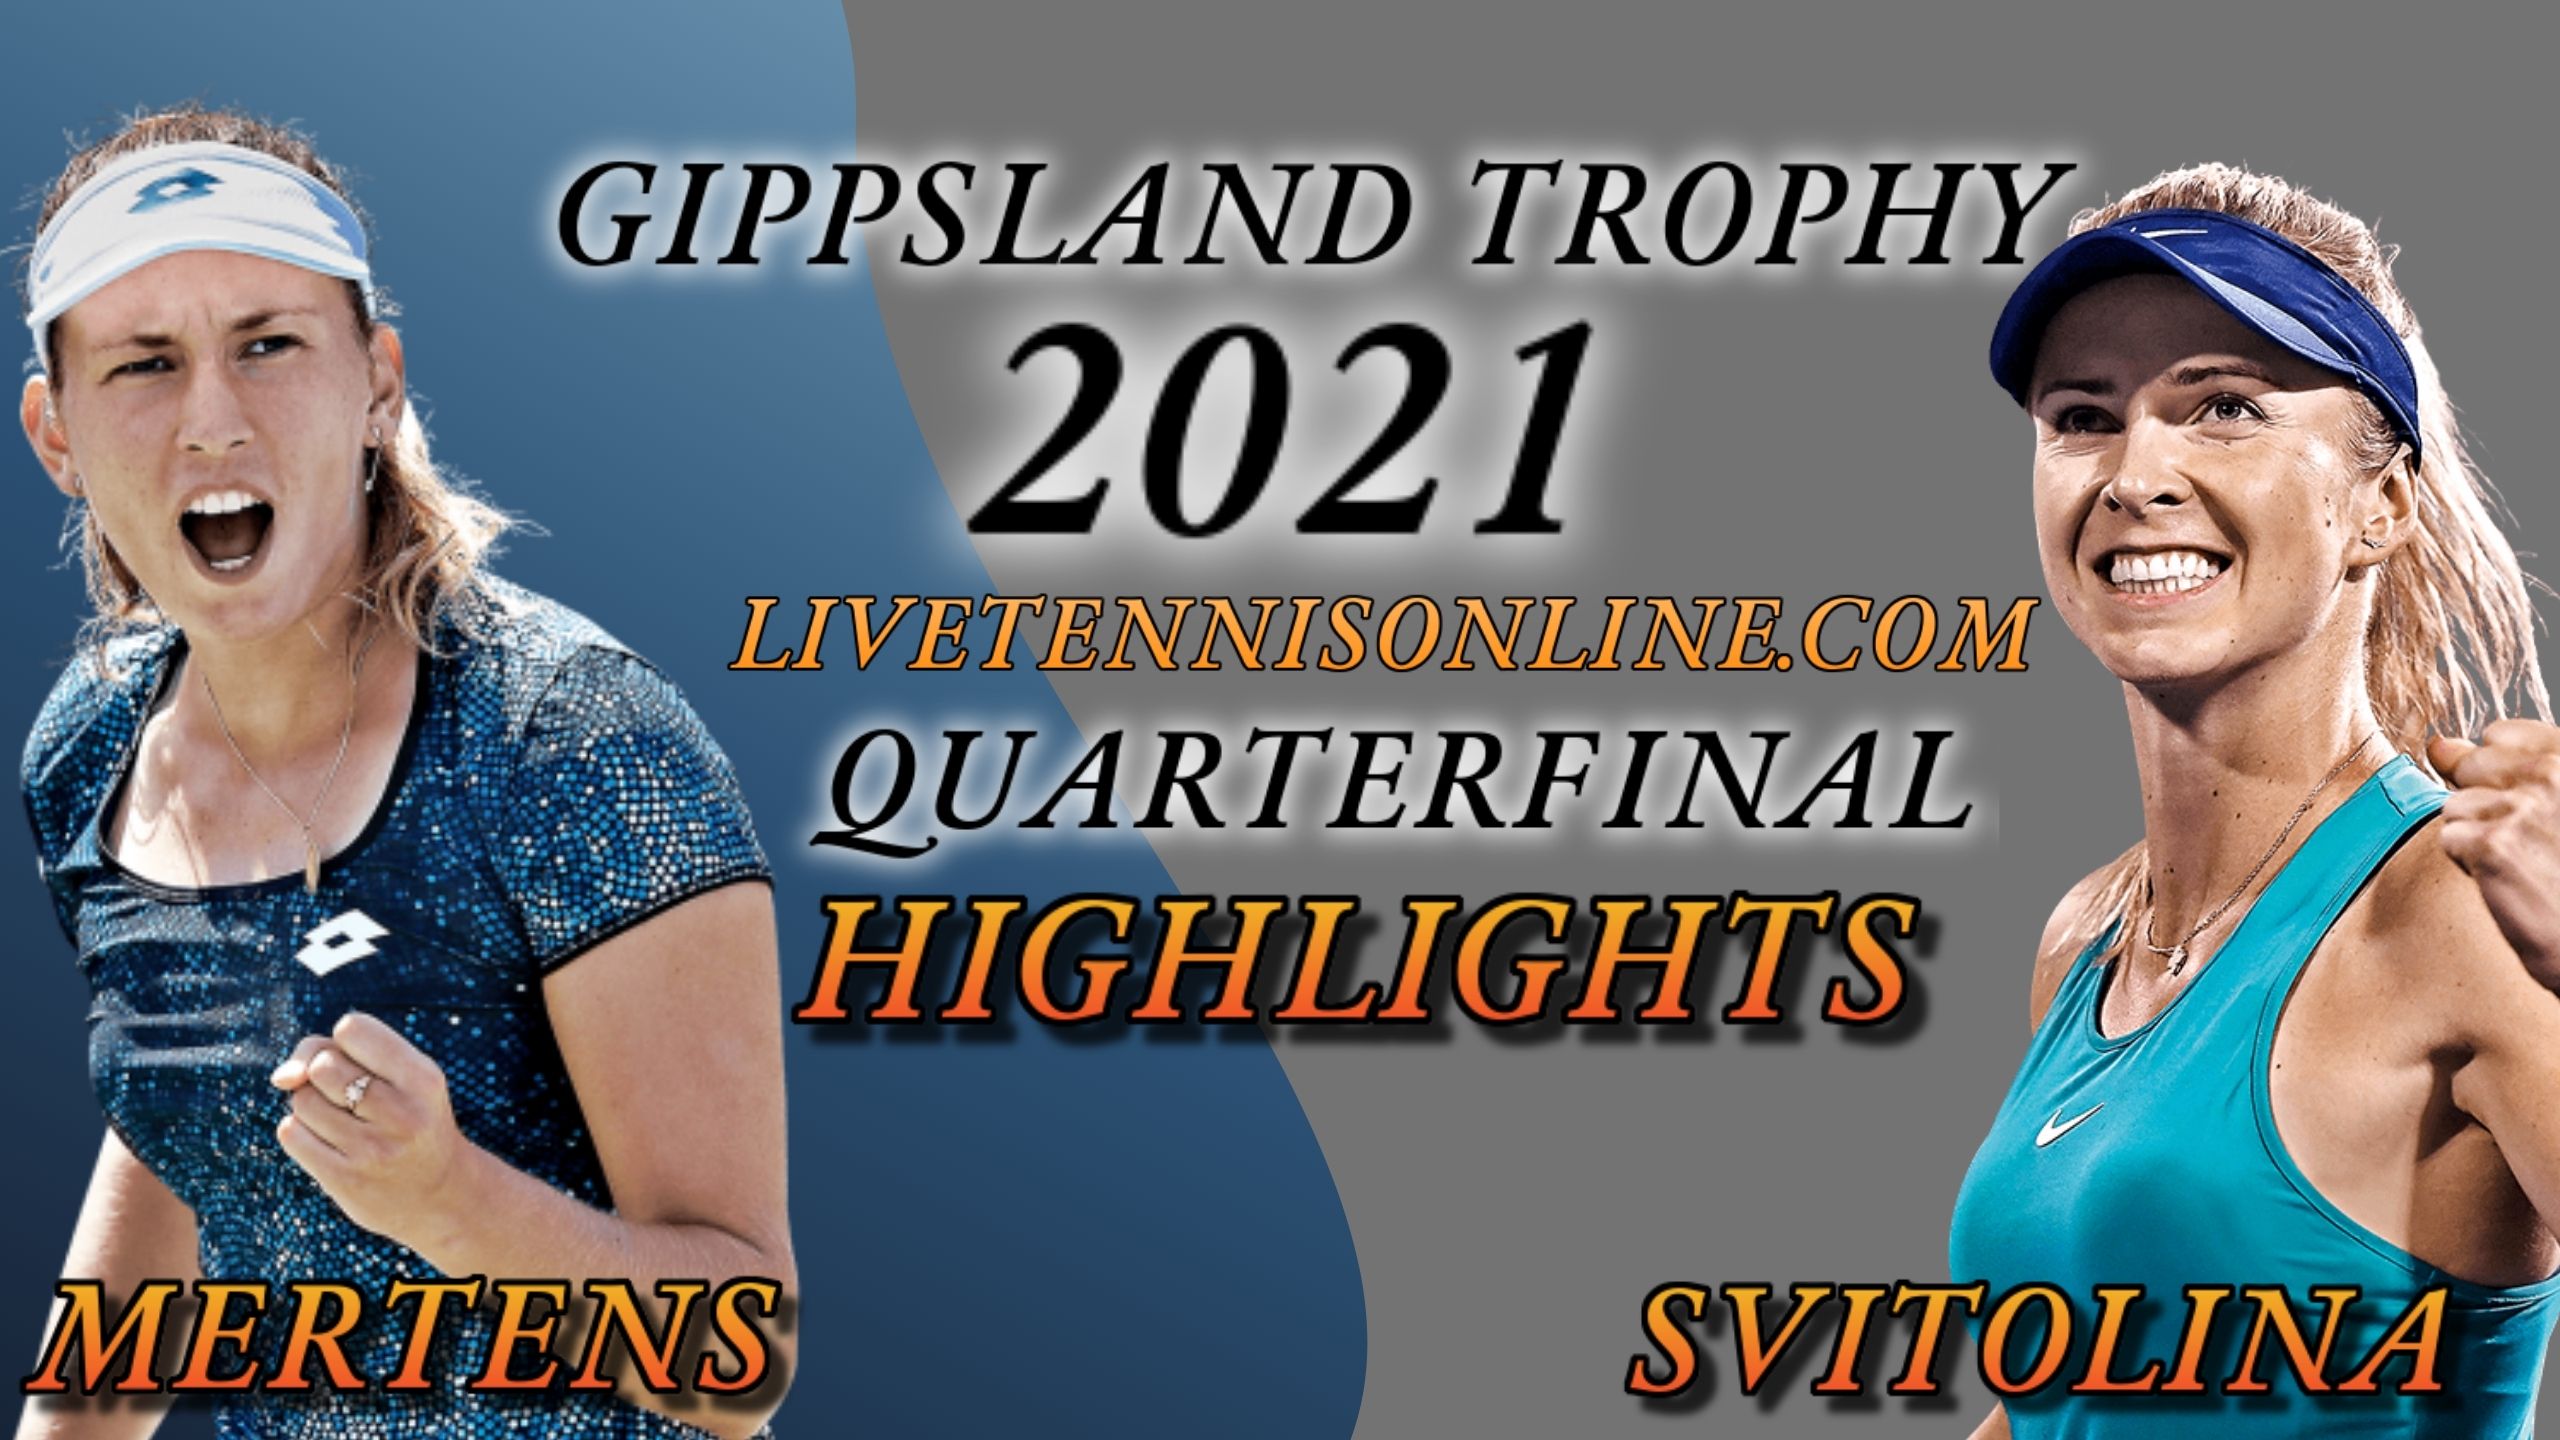 Mertens Vs Svitolina Quarterfinal Highlights 2021